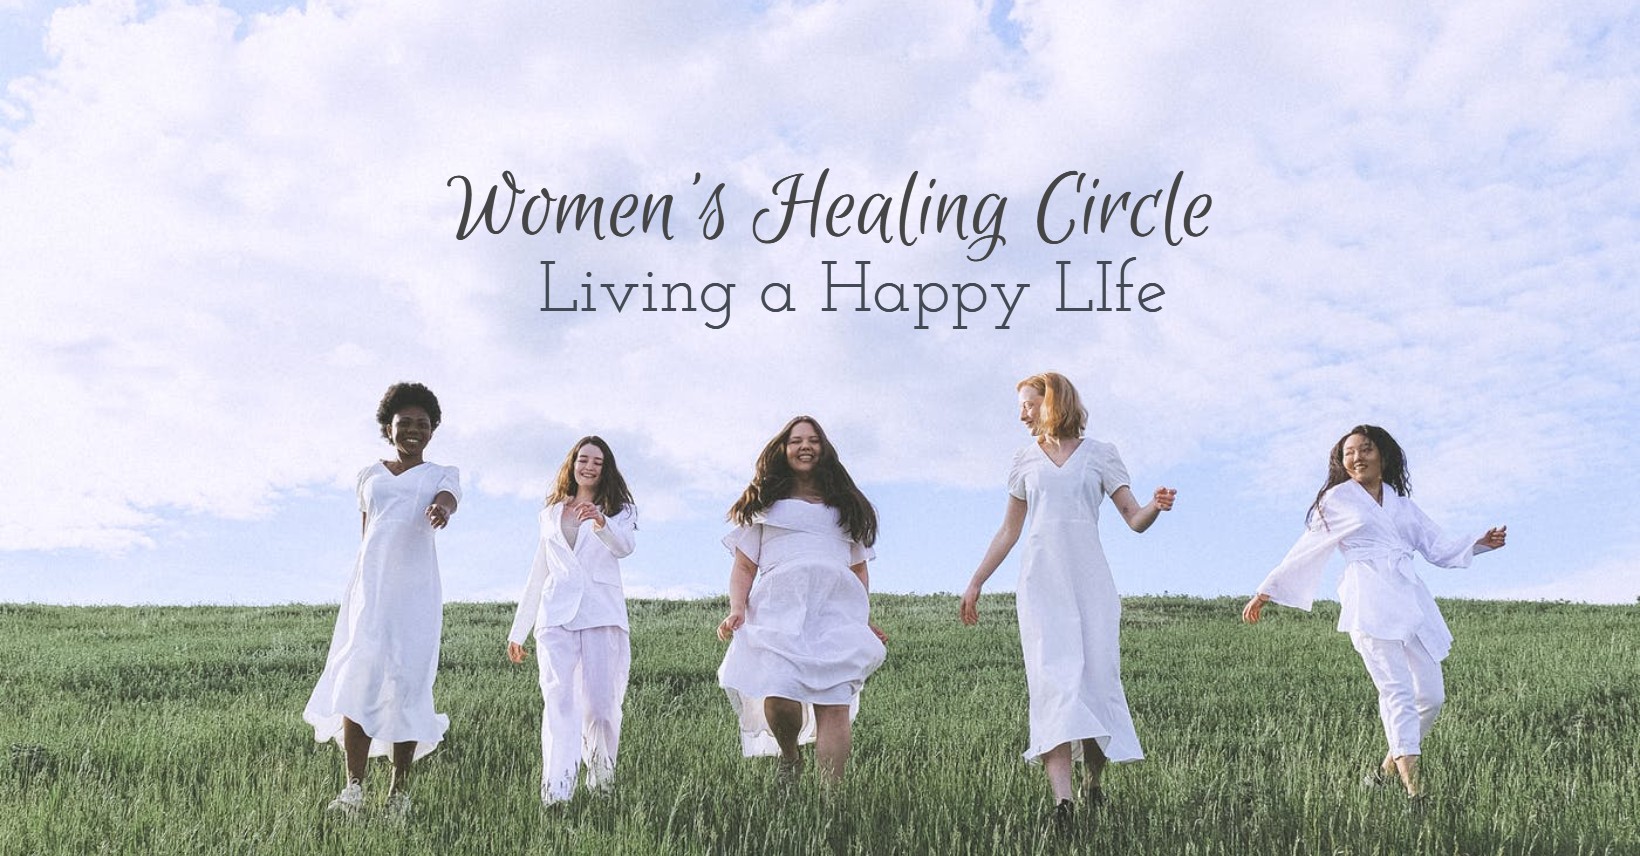 Women's Healing Circle: Living a Happy Life